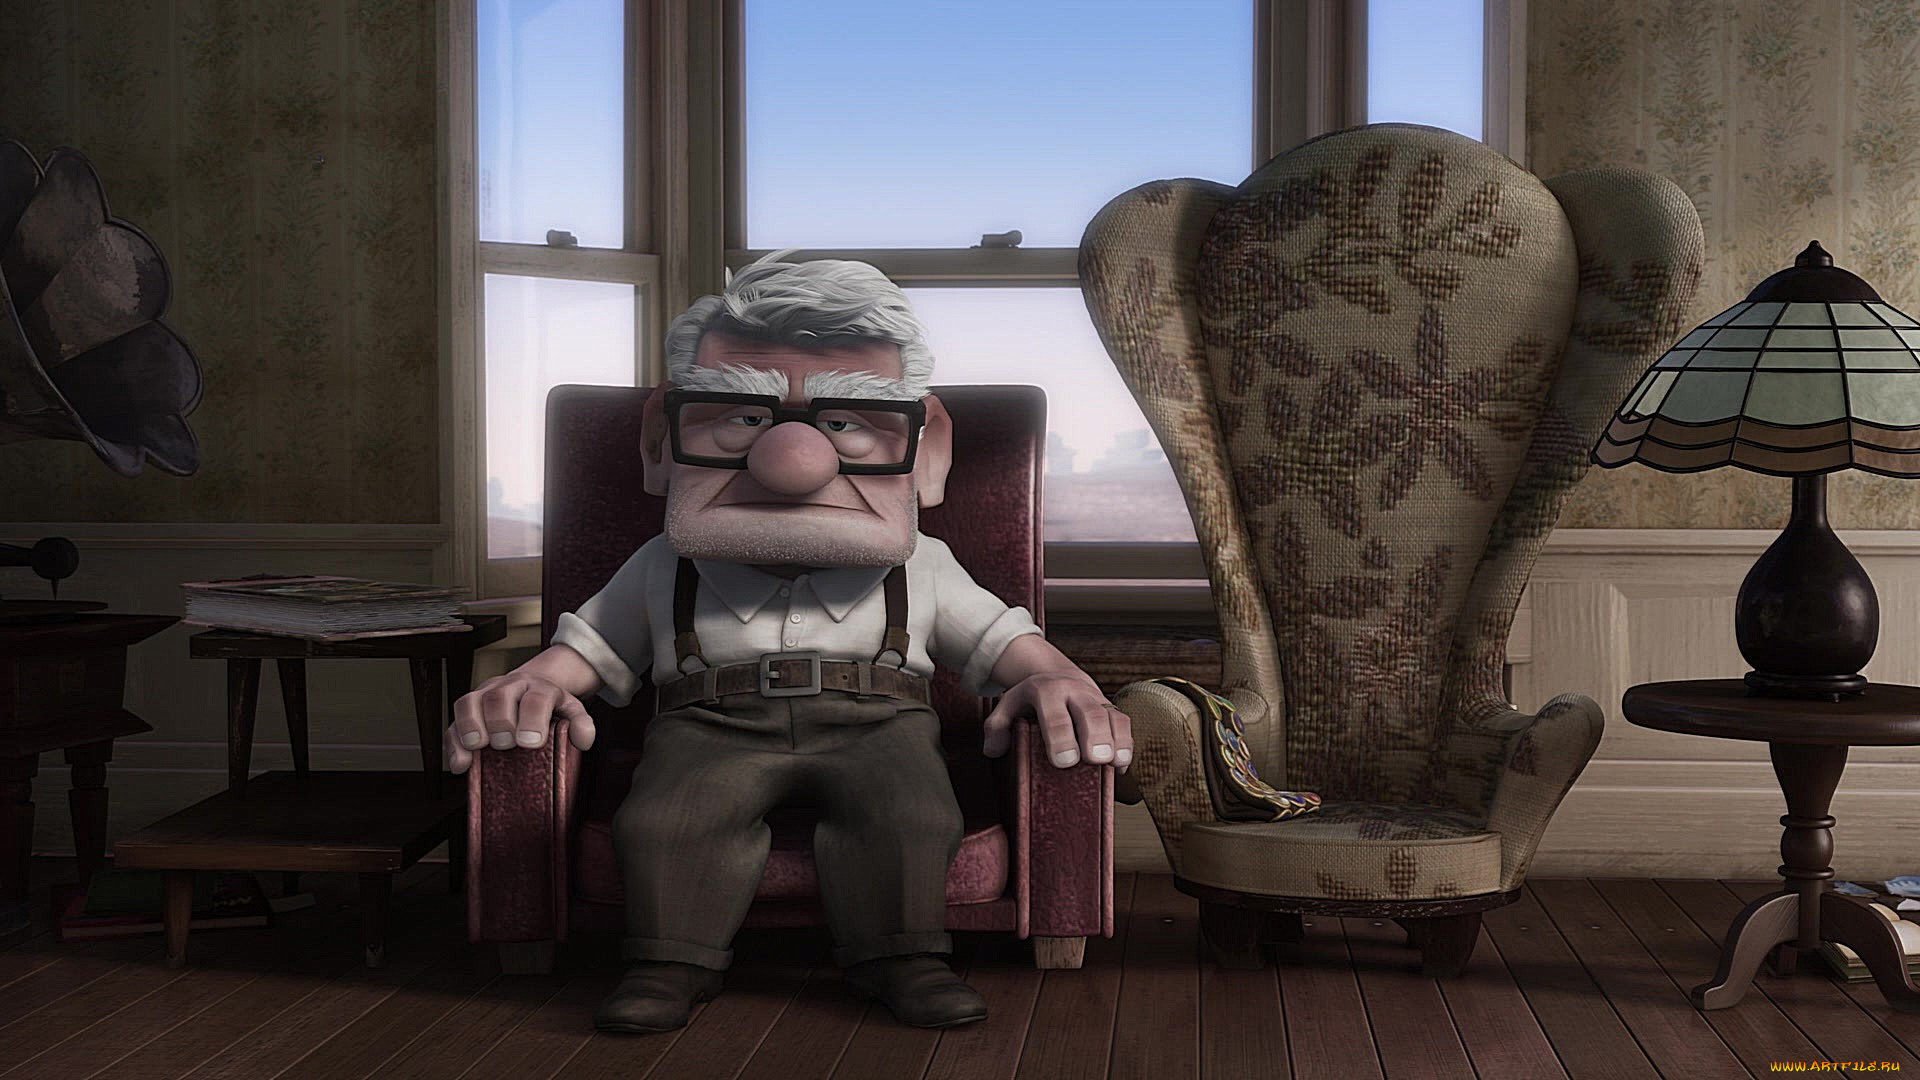 мультфильмы, up, дедушка, кресло, очки, лампа, окно, мужчина